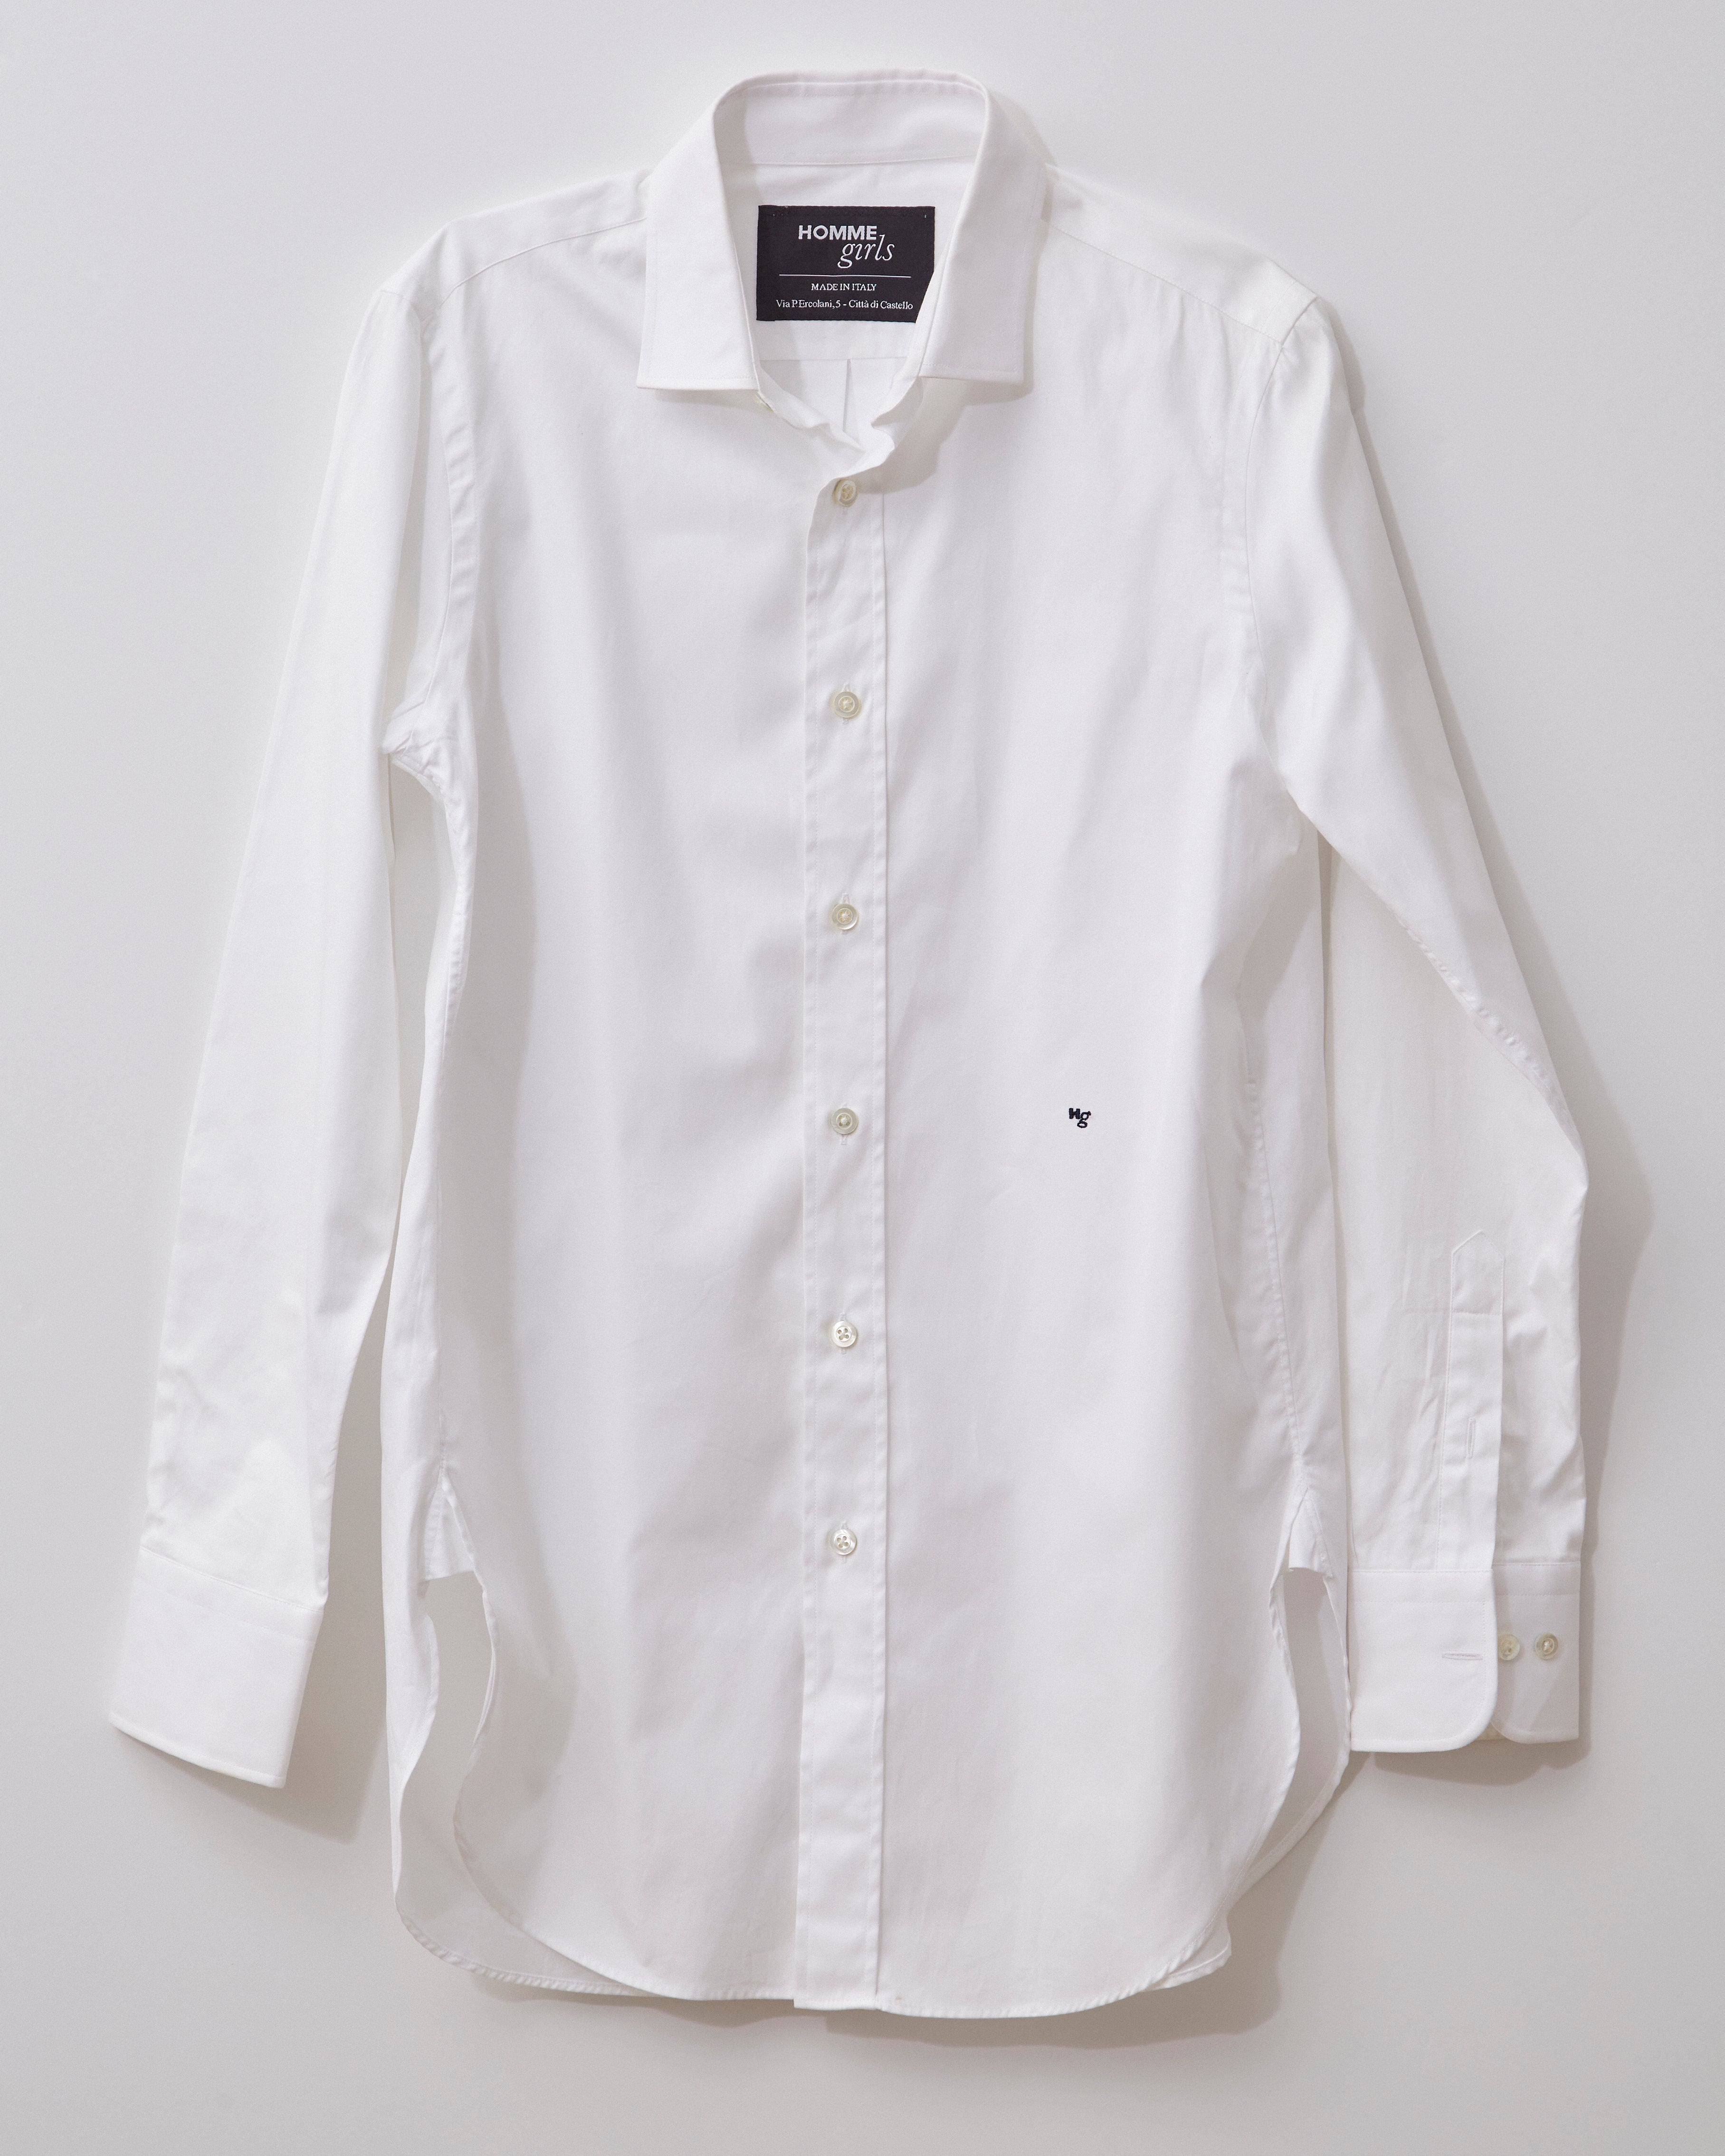 men’s white dress shirt